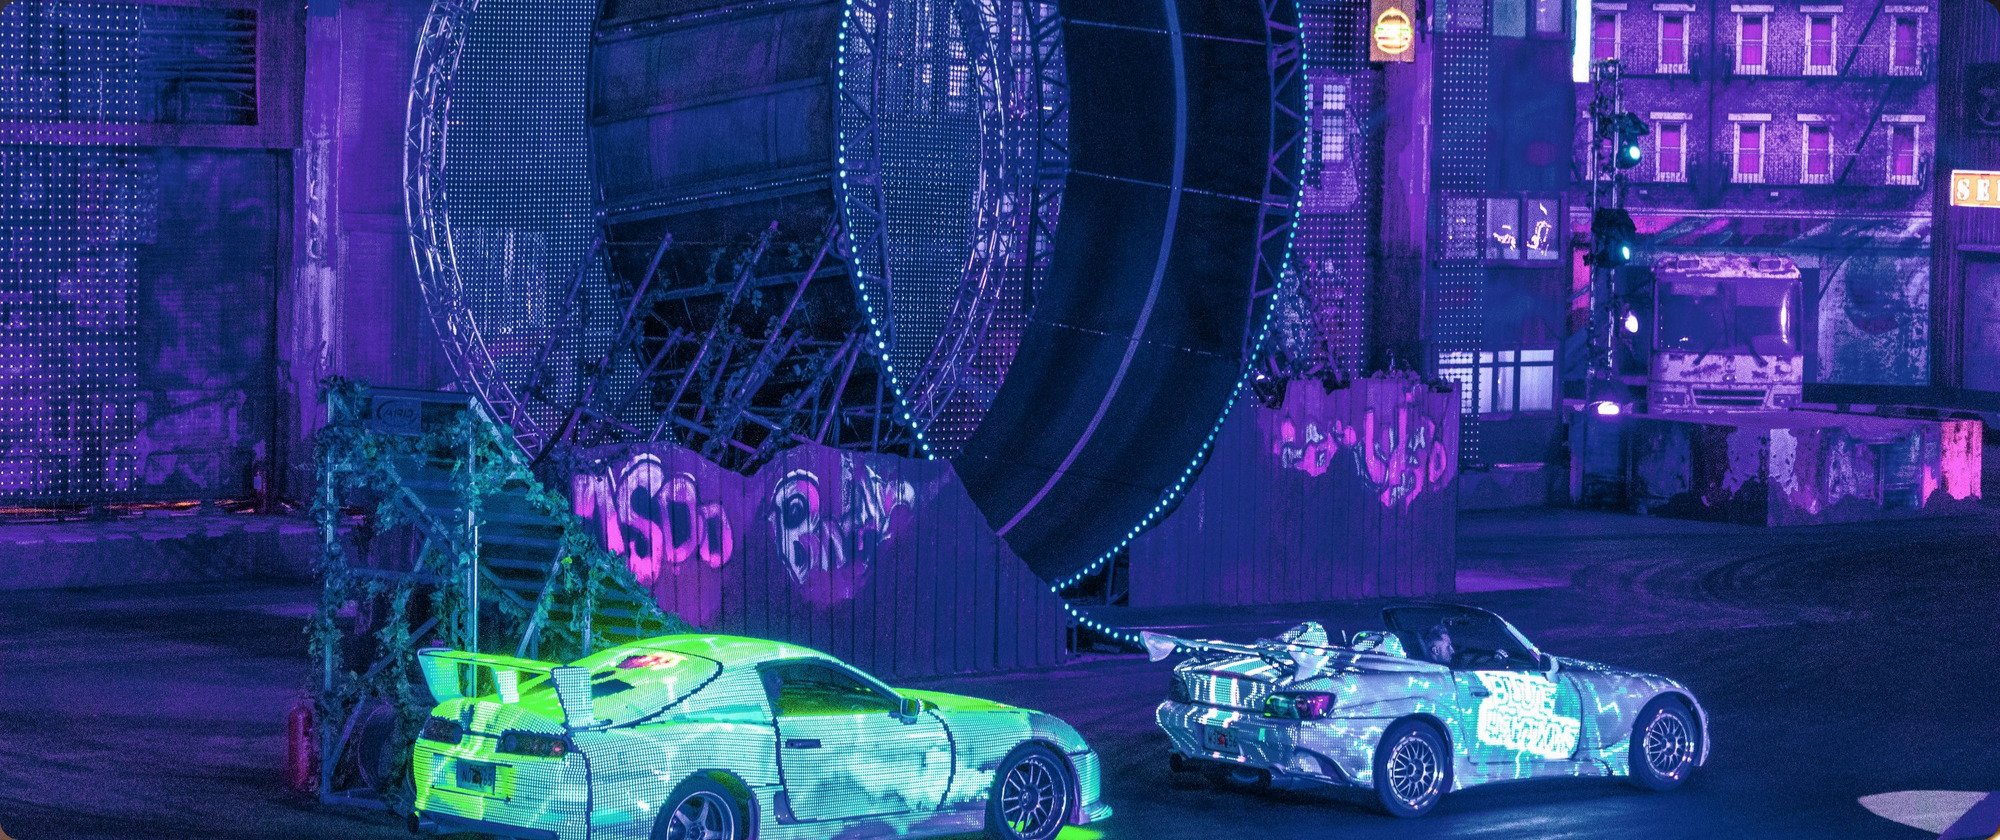 Light Up Cars - Mission Speed Global Village.jpg